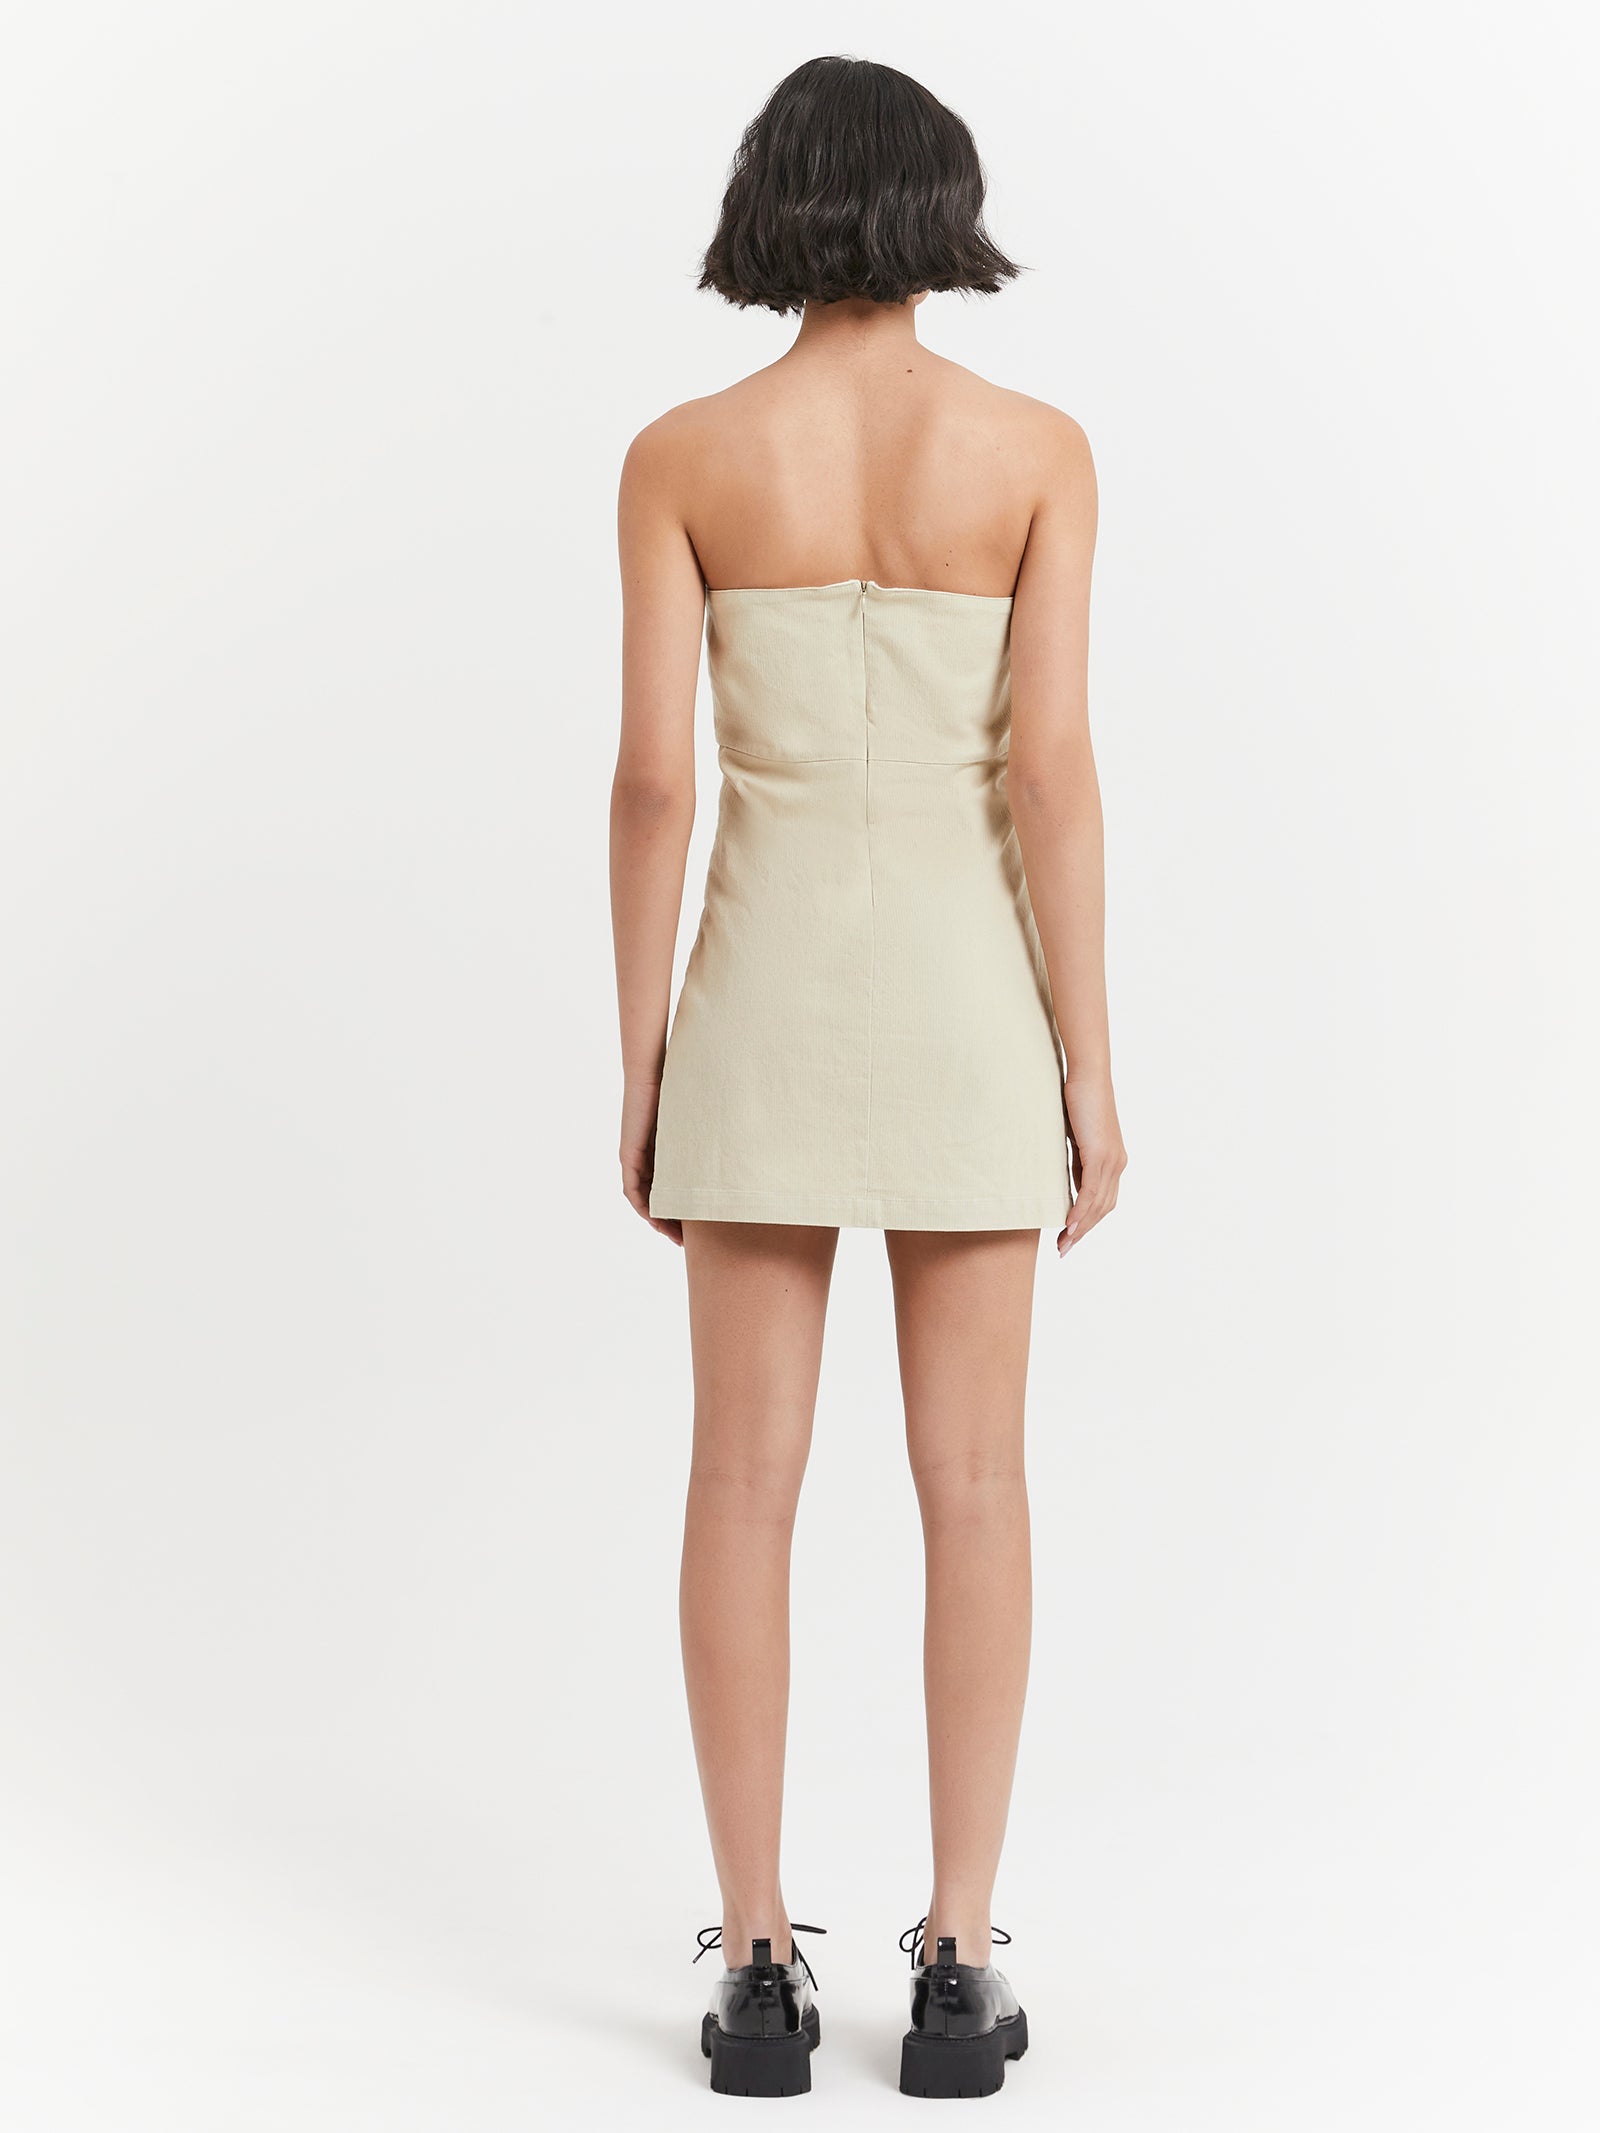 Carey Strapless Mini Dress in Oatmeal - Glue Store